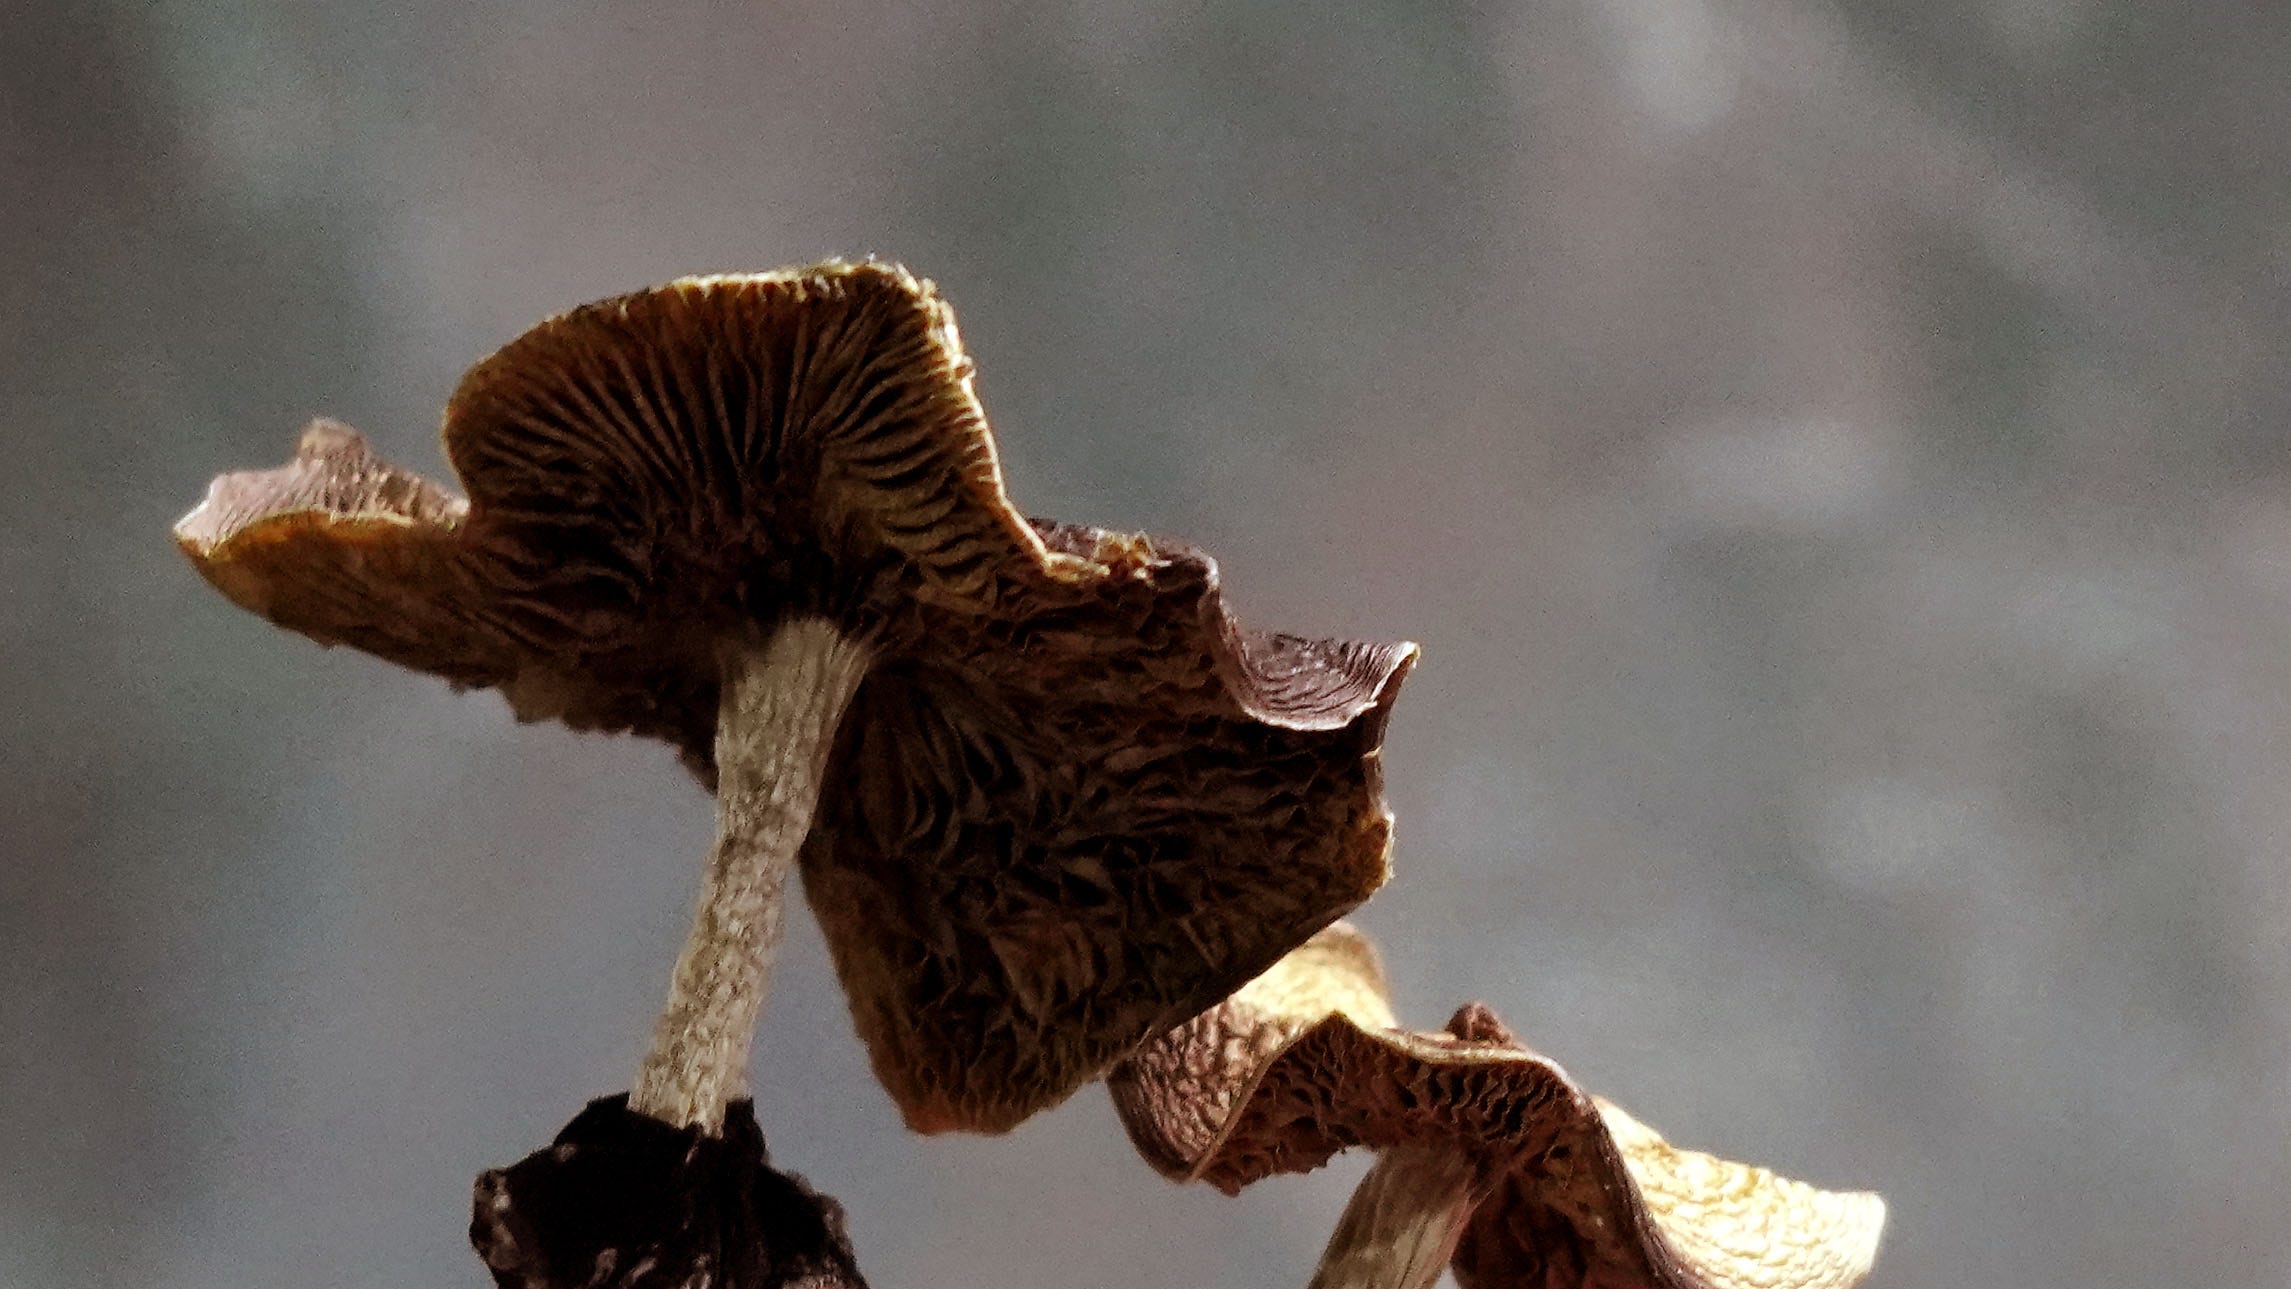 Magic Mushrooms Gain Popularity Following Decriminalization Efforts